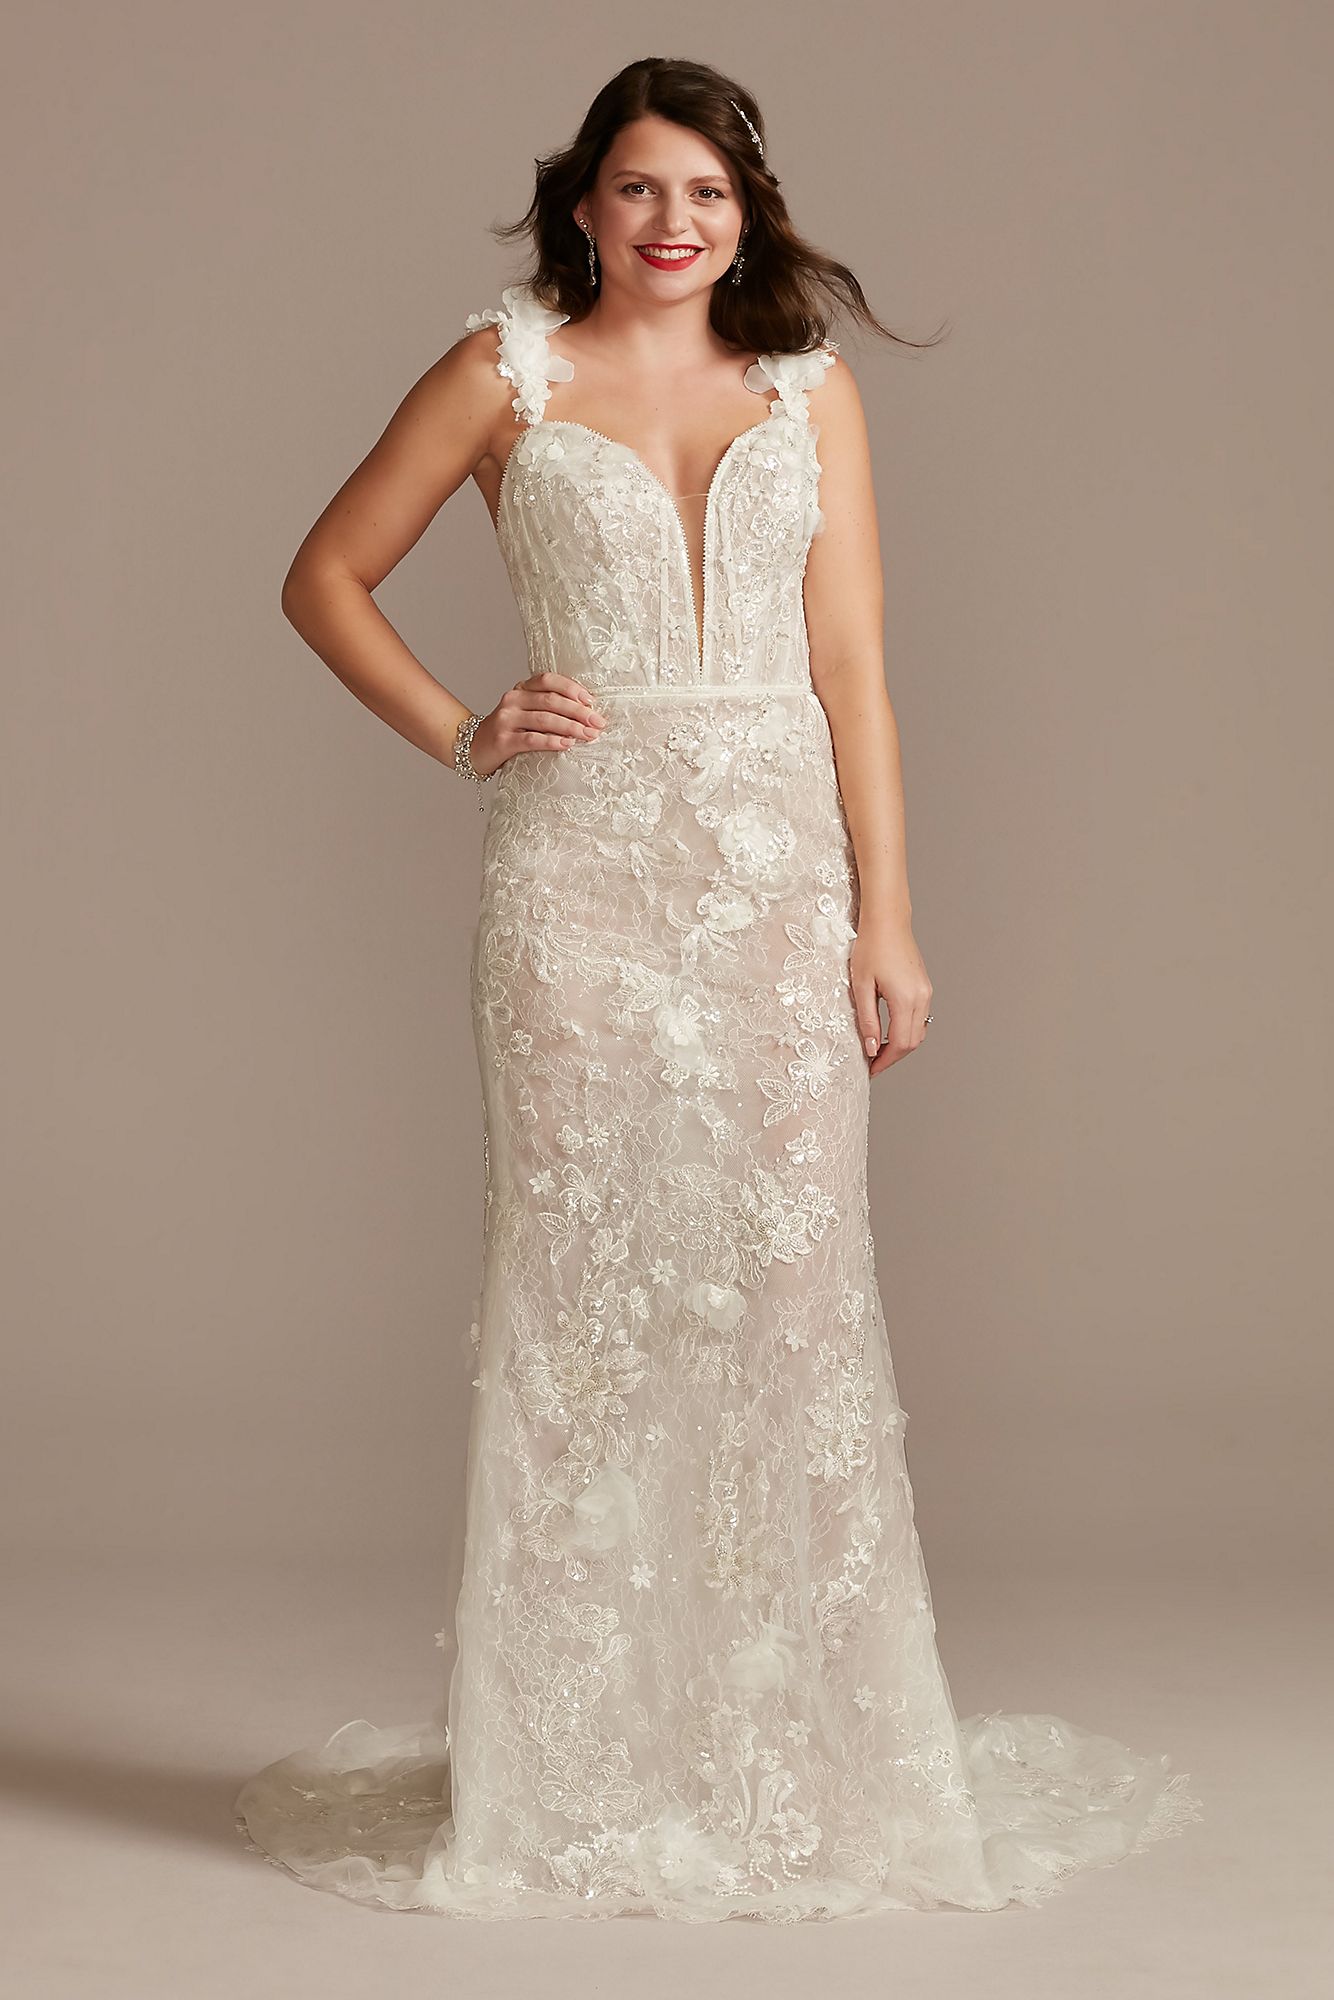 3D Floral Plunge Tall Bodysuit Wedding Dress Galina Signature 4XLMBSWG885